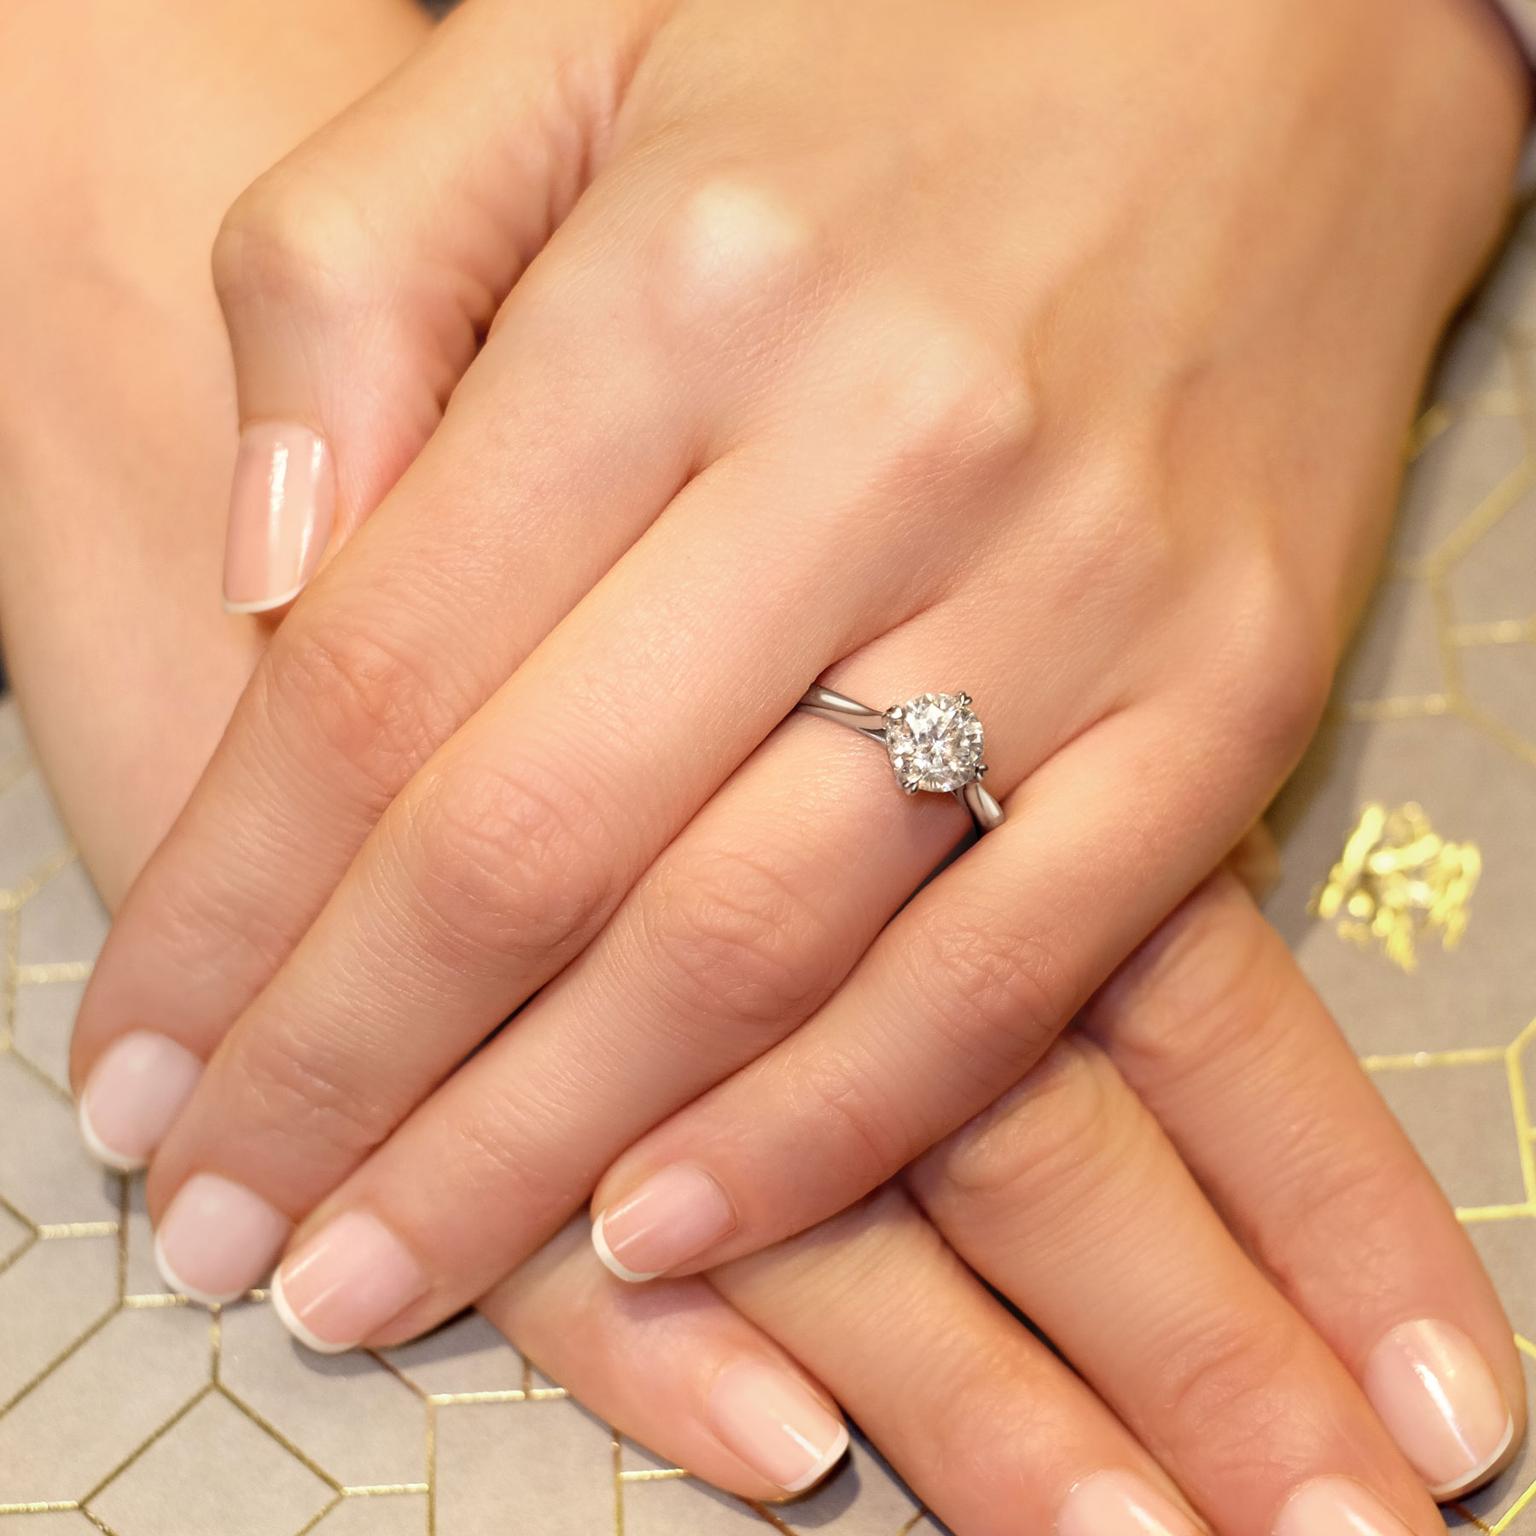 George Pragnell Windsor 1.52-carat round brilliant diamond engagement ring